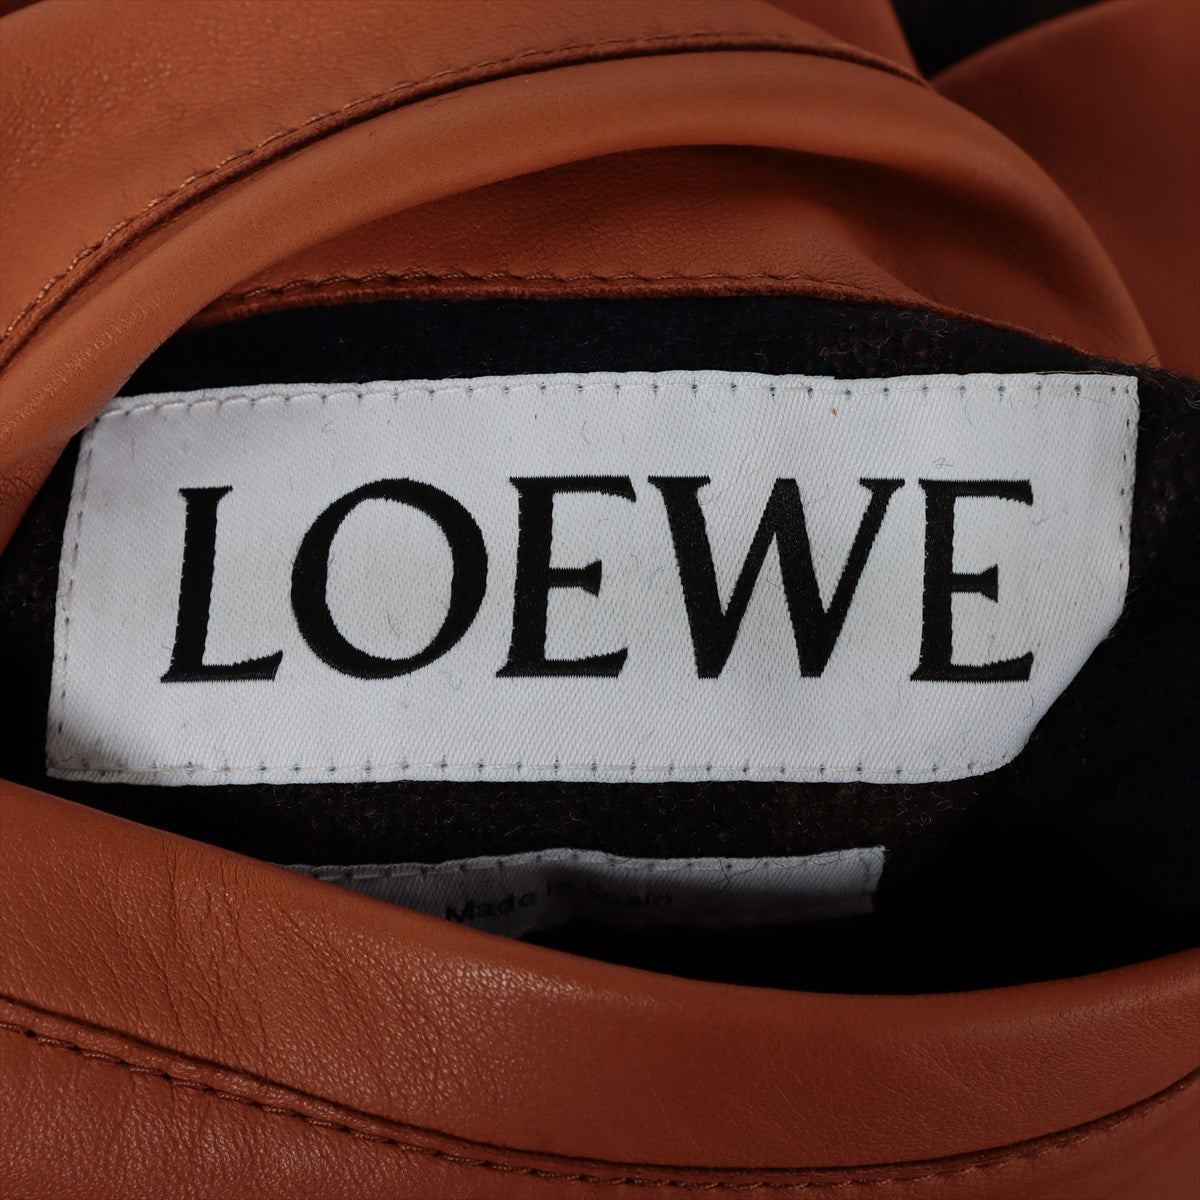 【LOEWE】ロエベラムスキンレザーアナグラムビジネスバック